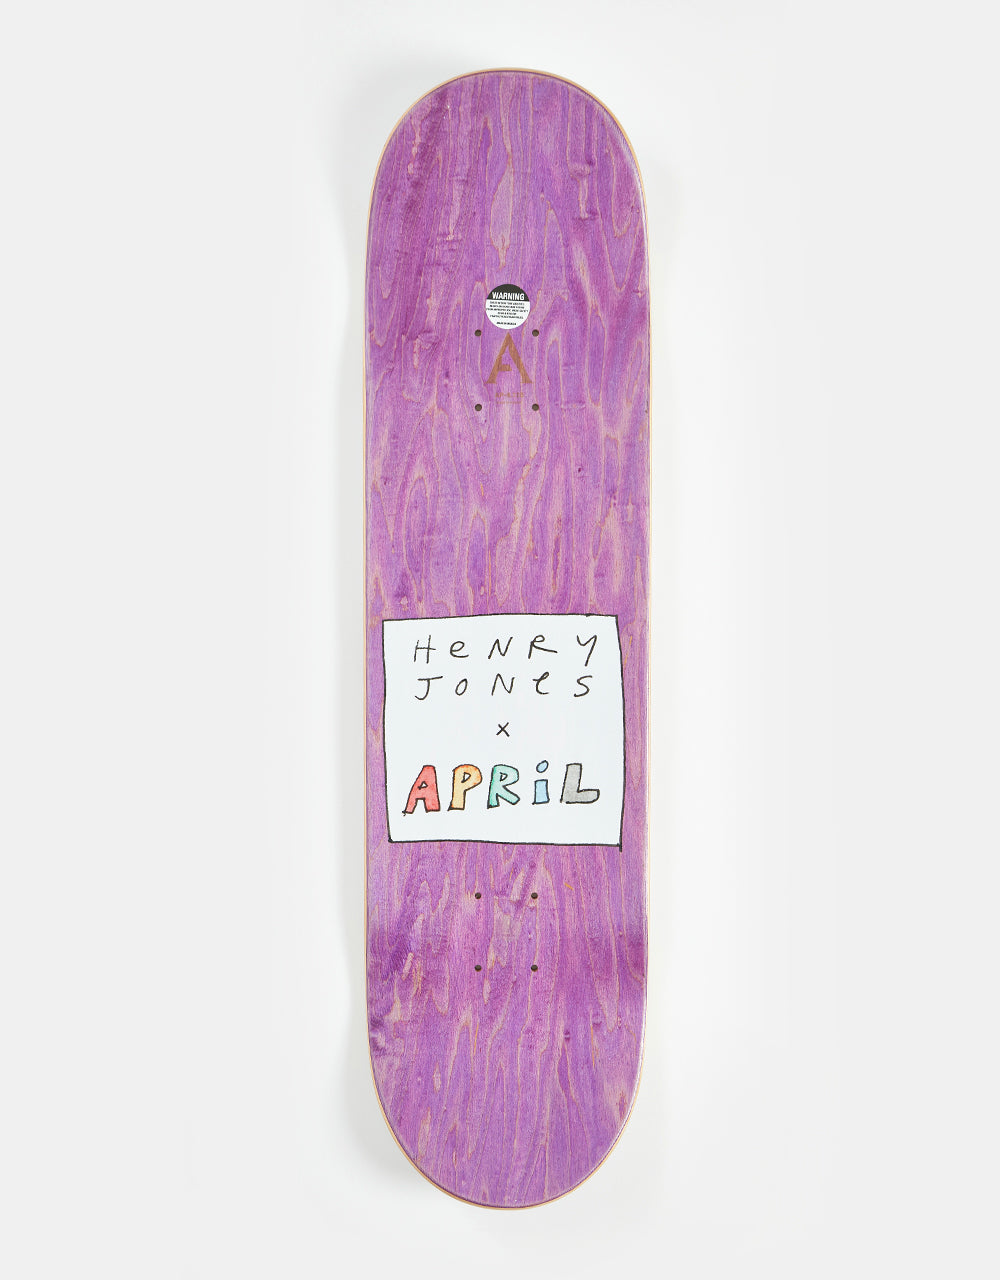 April x Henry Jones O'Neill Wallenberg Skateboard Deck - 8.125"